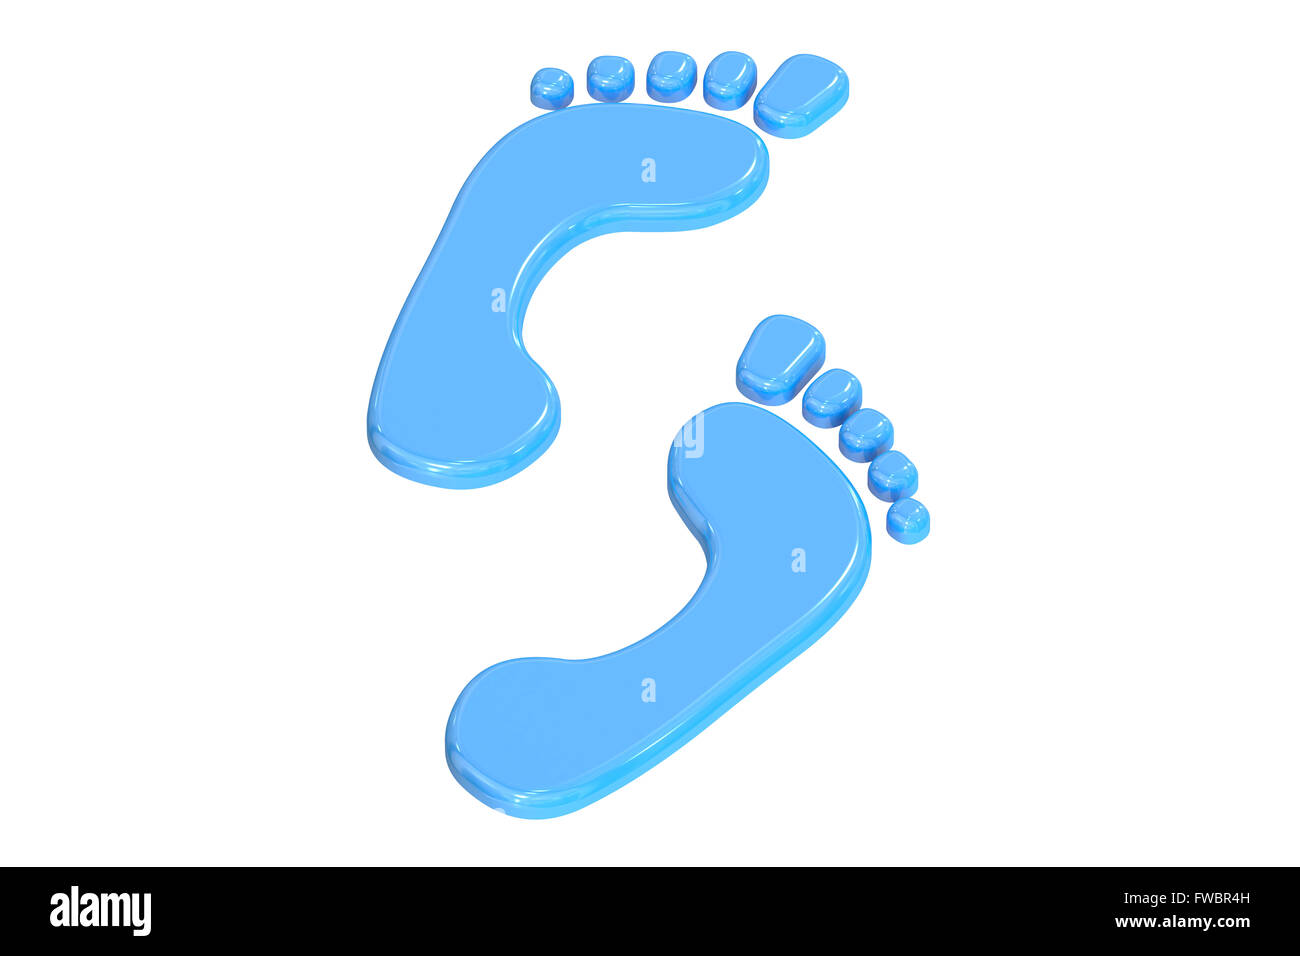 Paw print stamp stock illustration. Illustration of footprint - 39006893